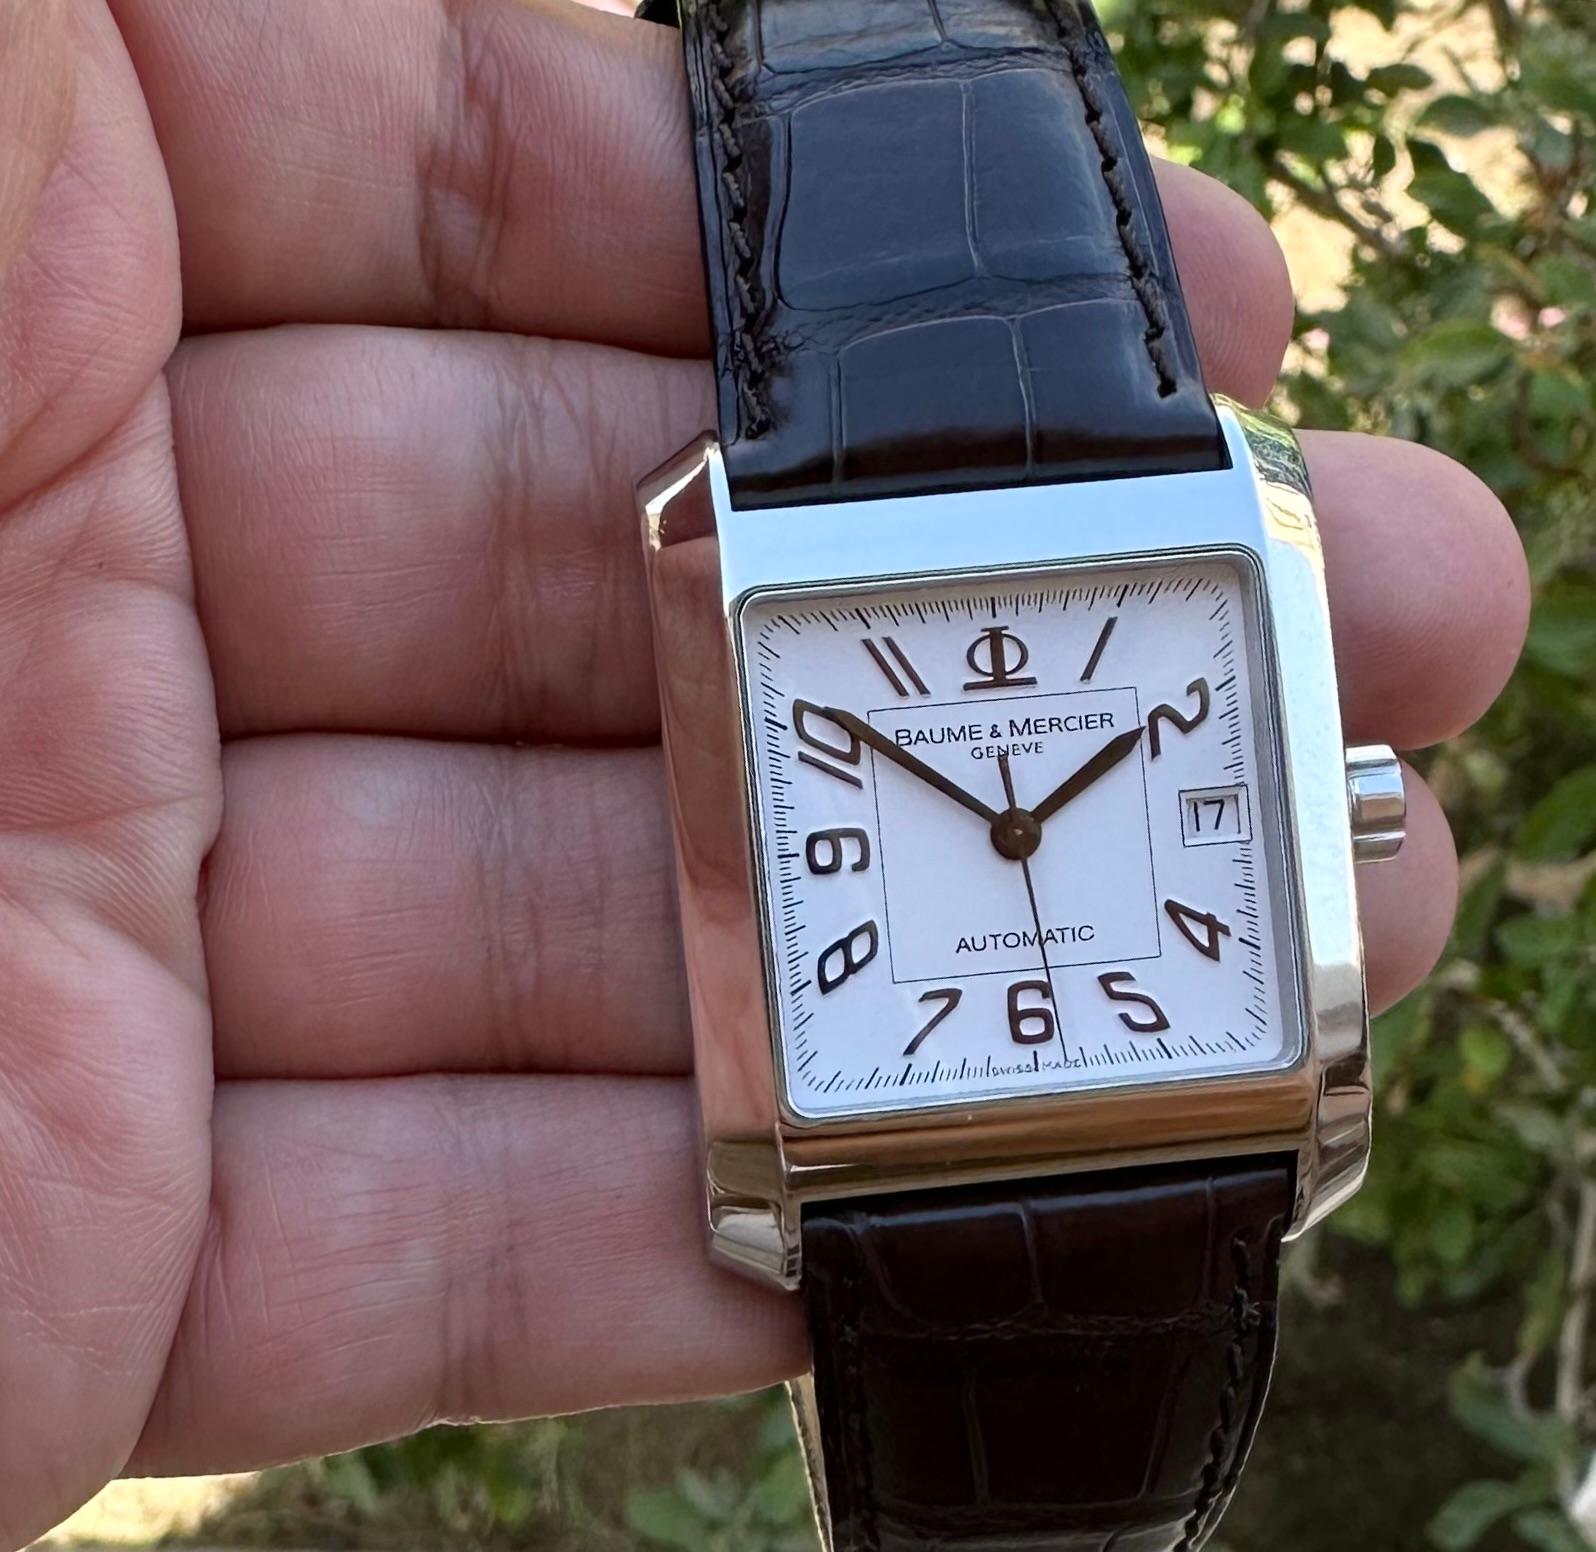 Baume & Mercier Hampton Classic Square XL Automatic 65532 Watch 4